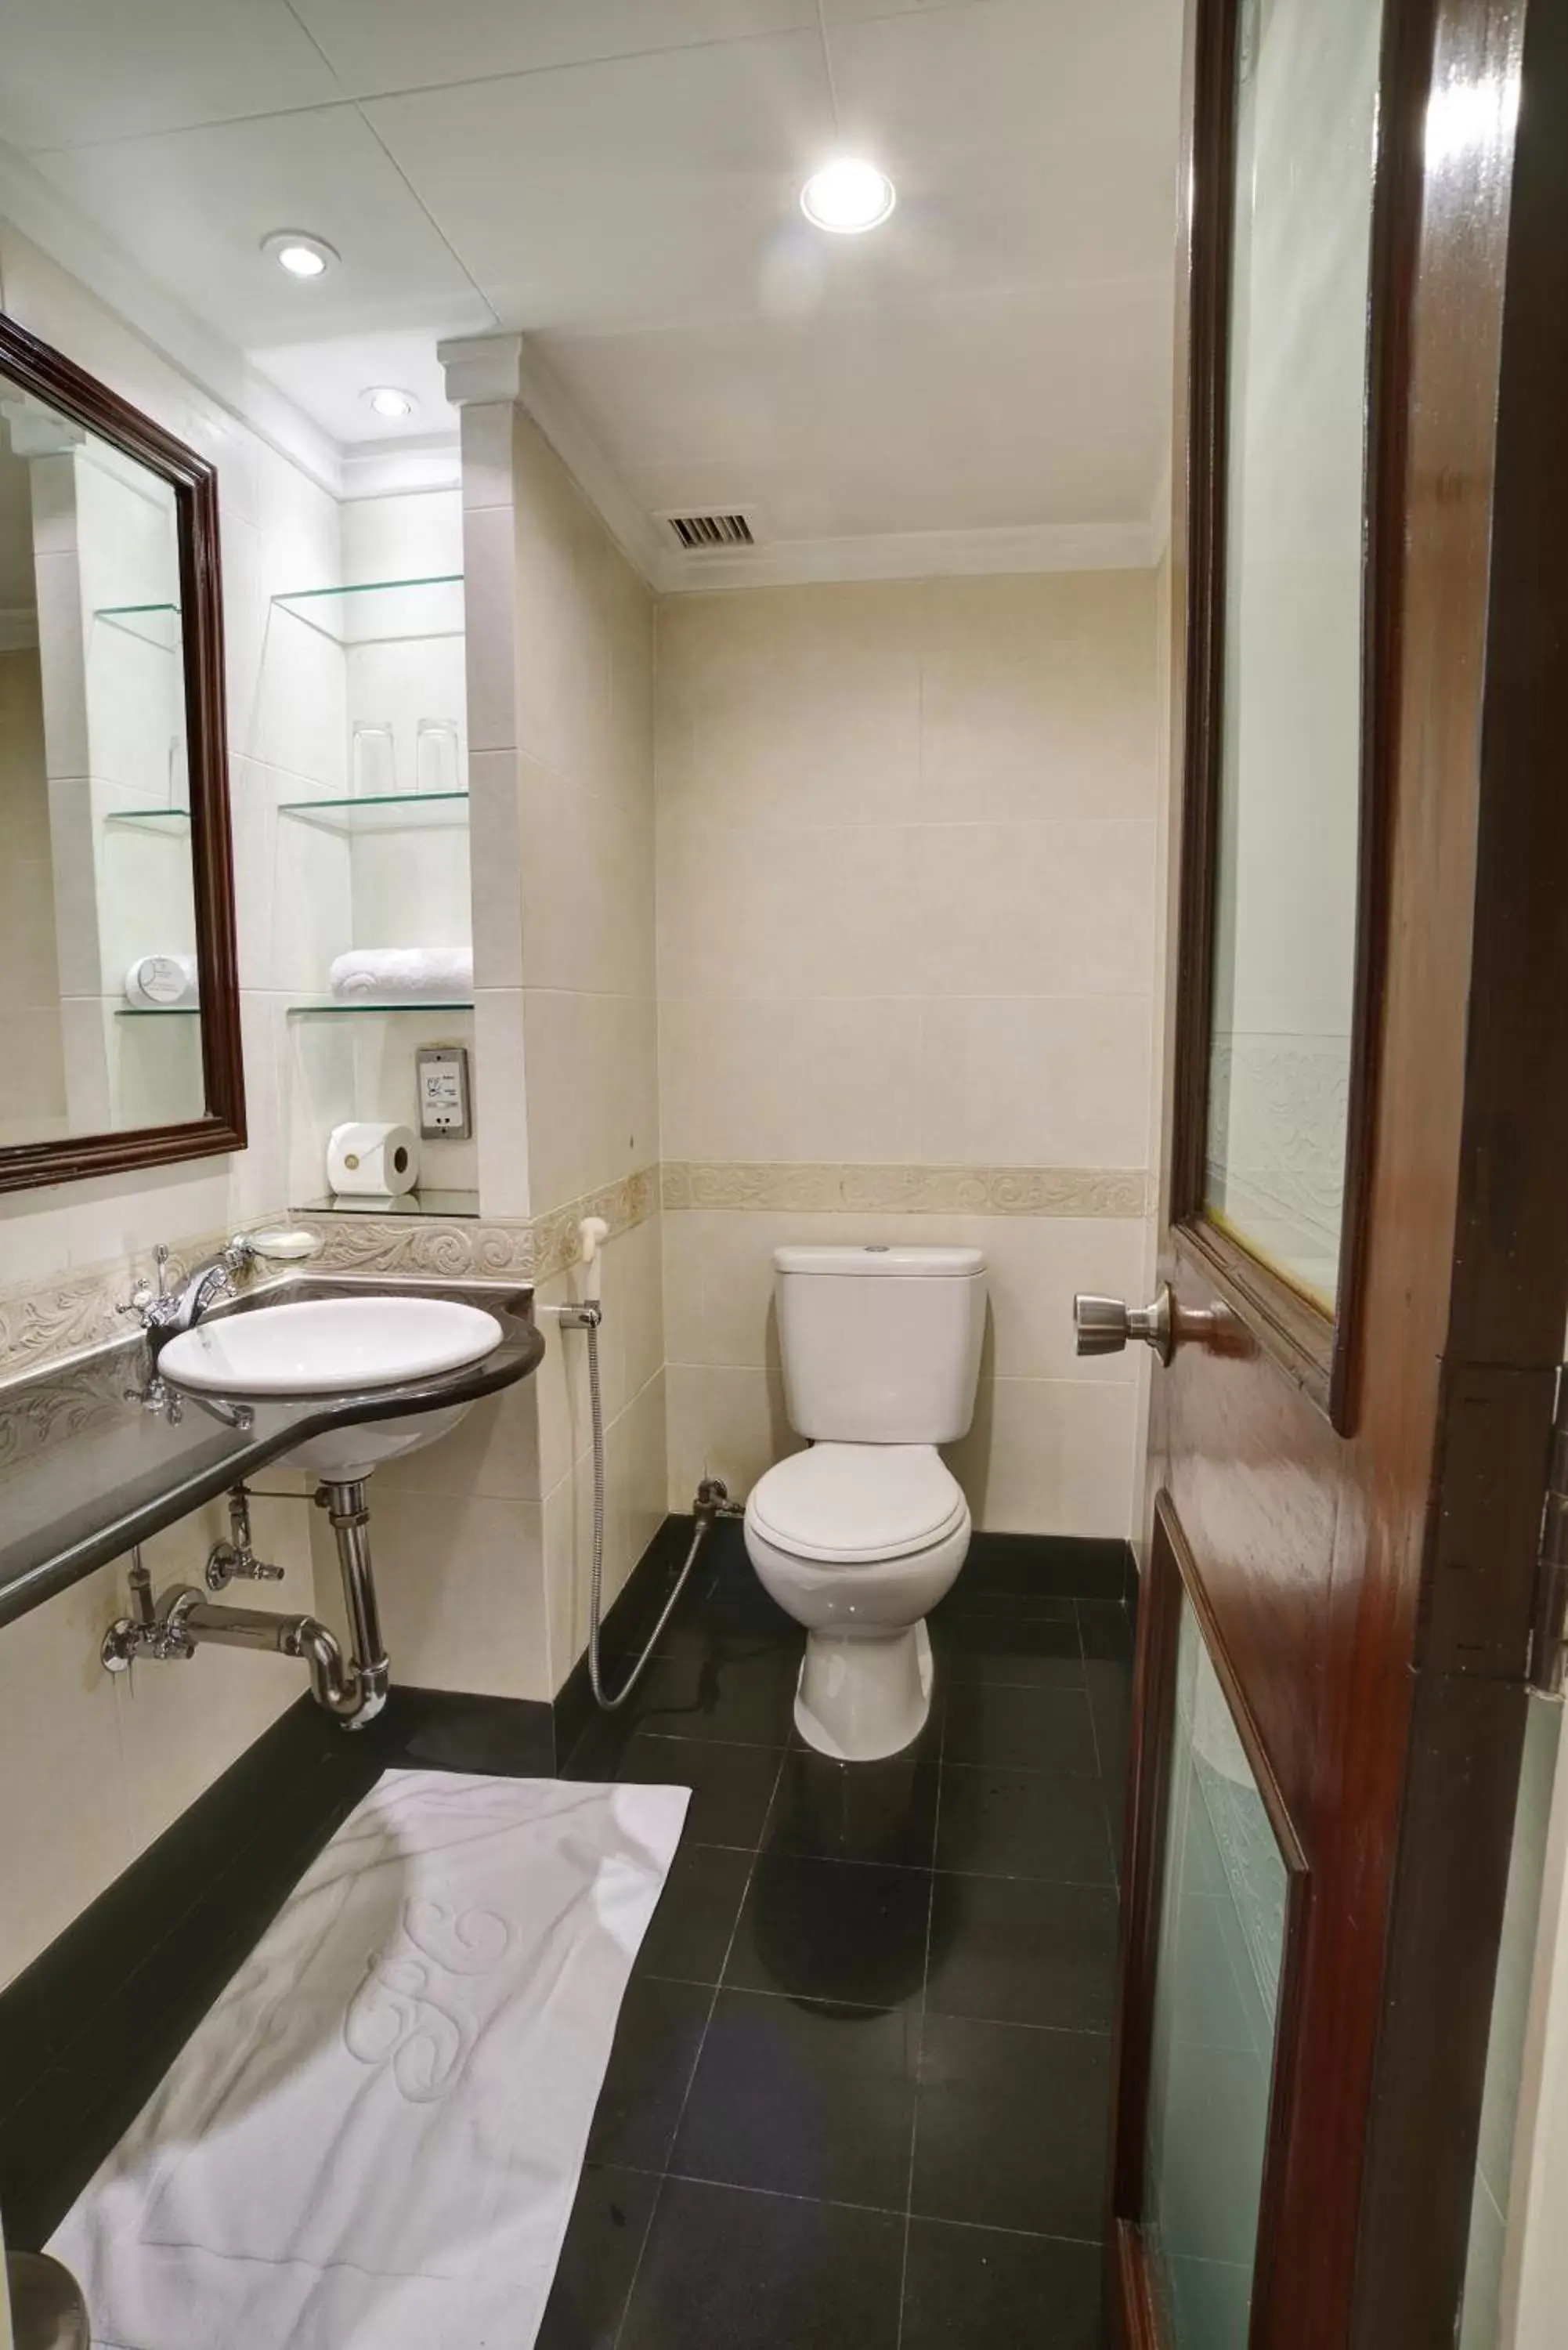 Bathroom in Pearl Continental Hotel, Karachi